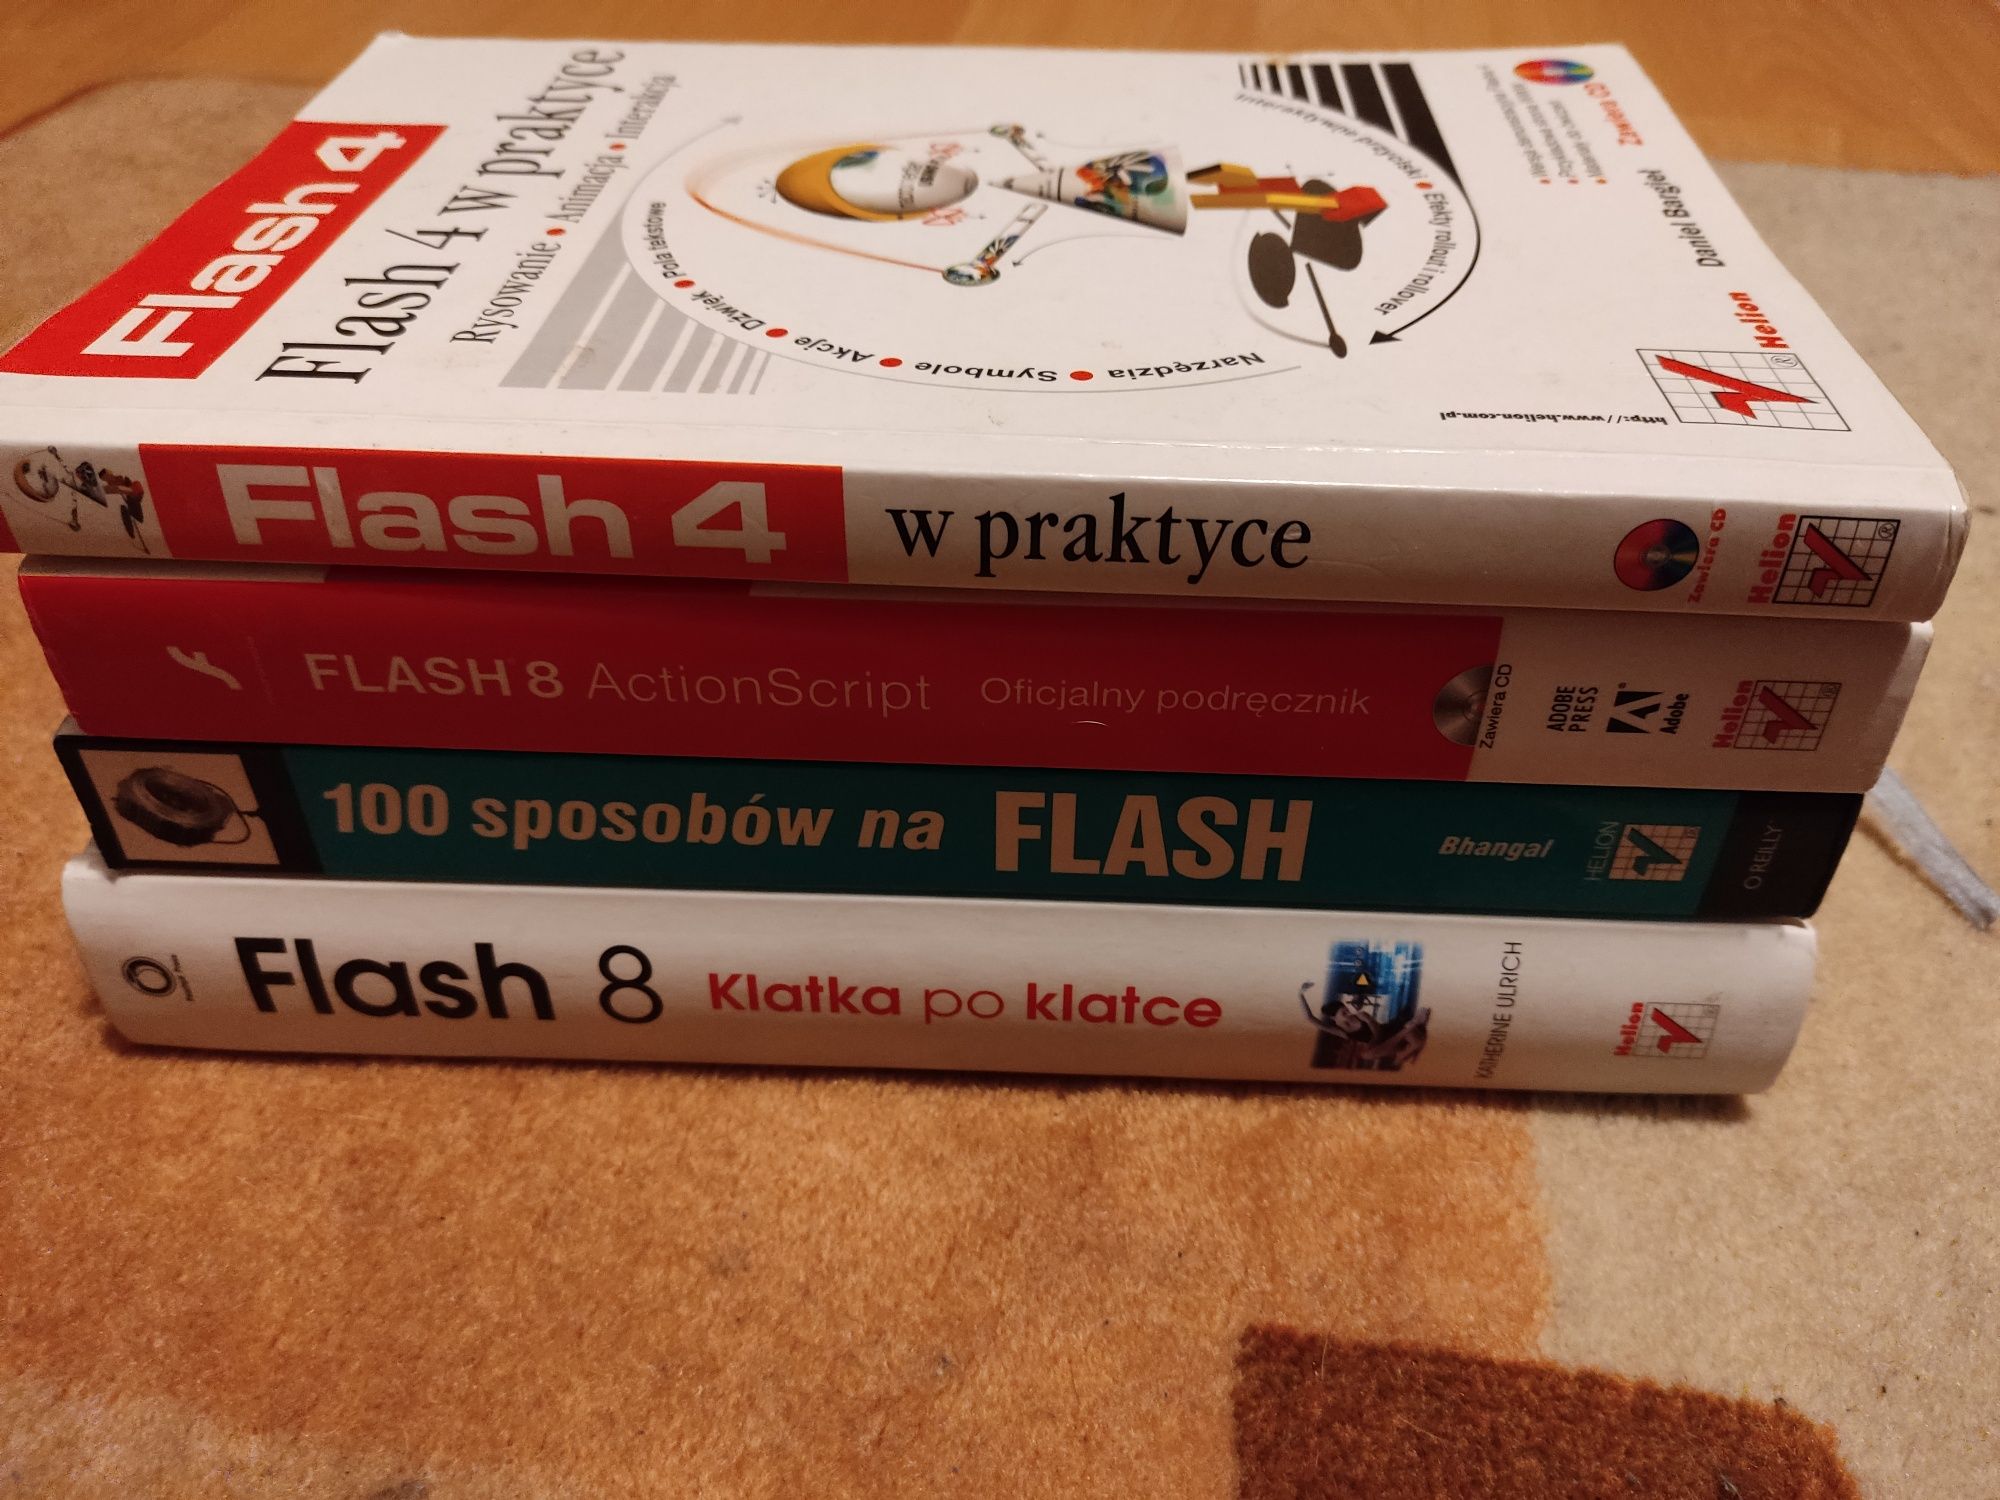 Książki Macromedia Flash - pakiet